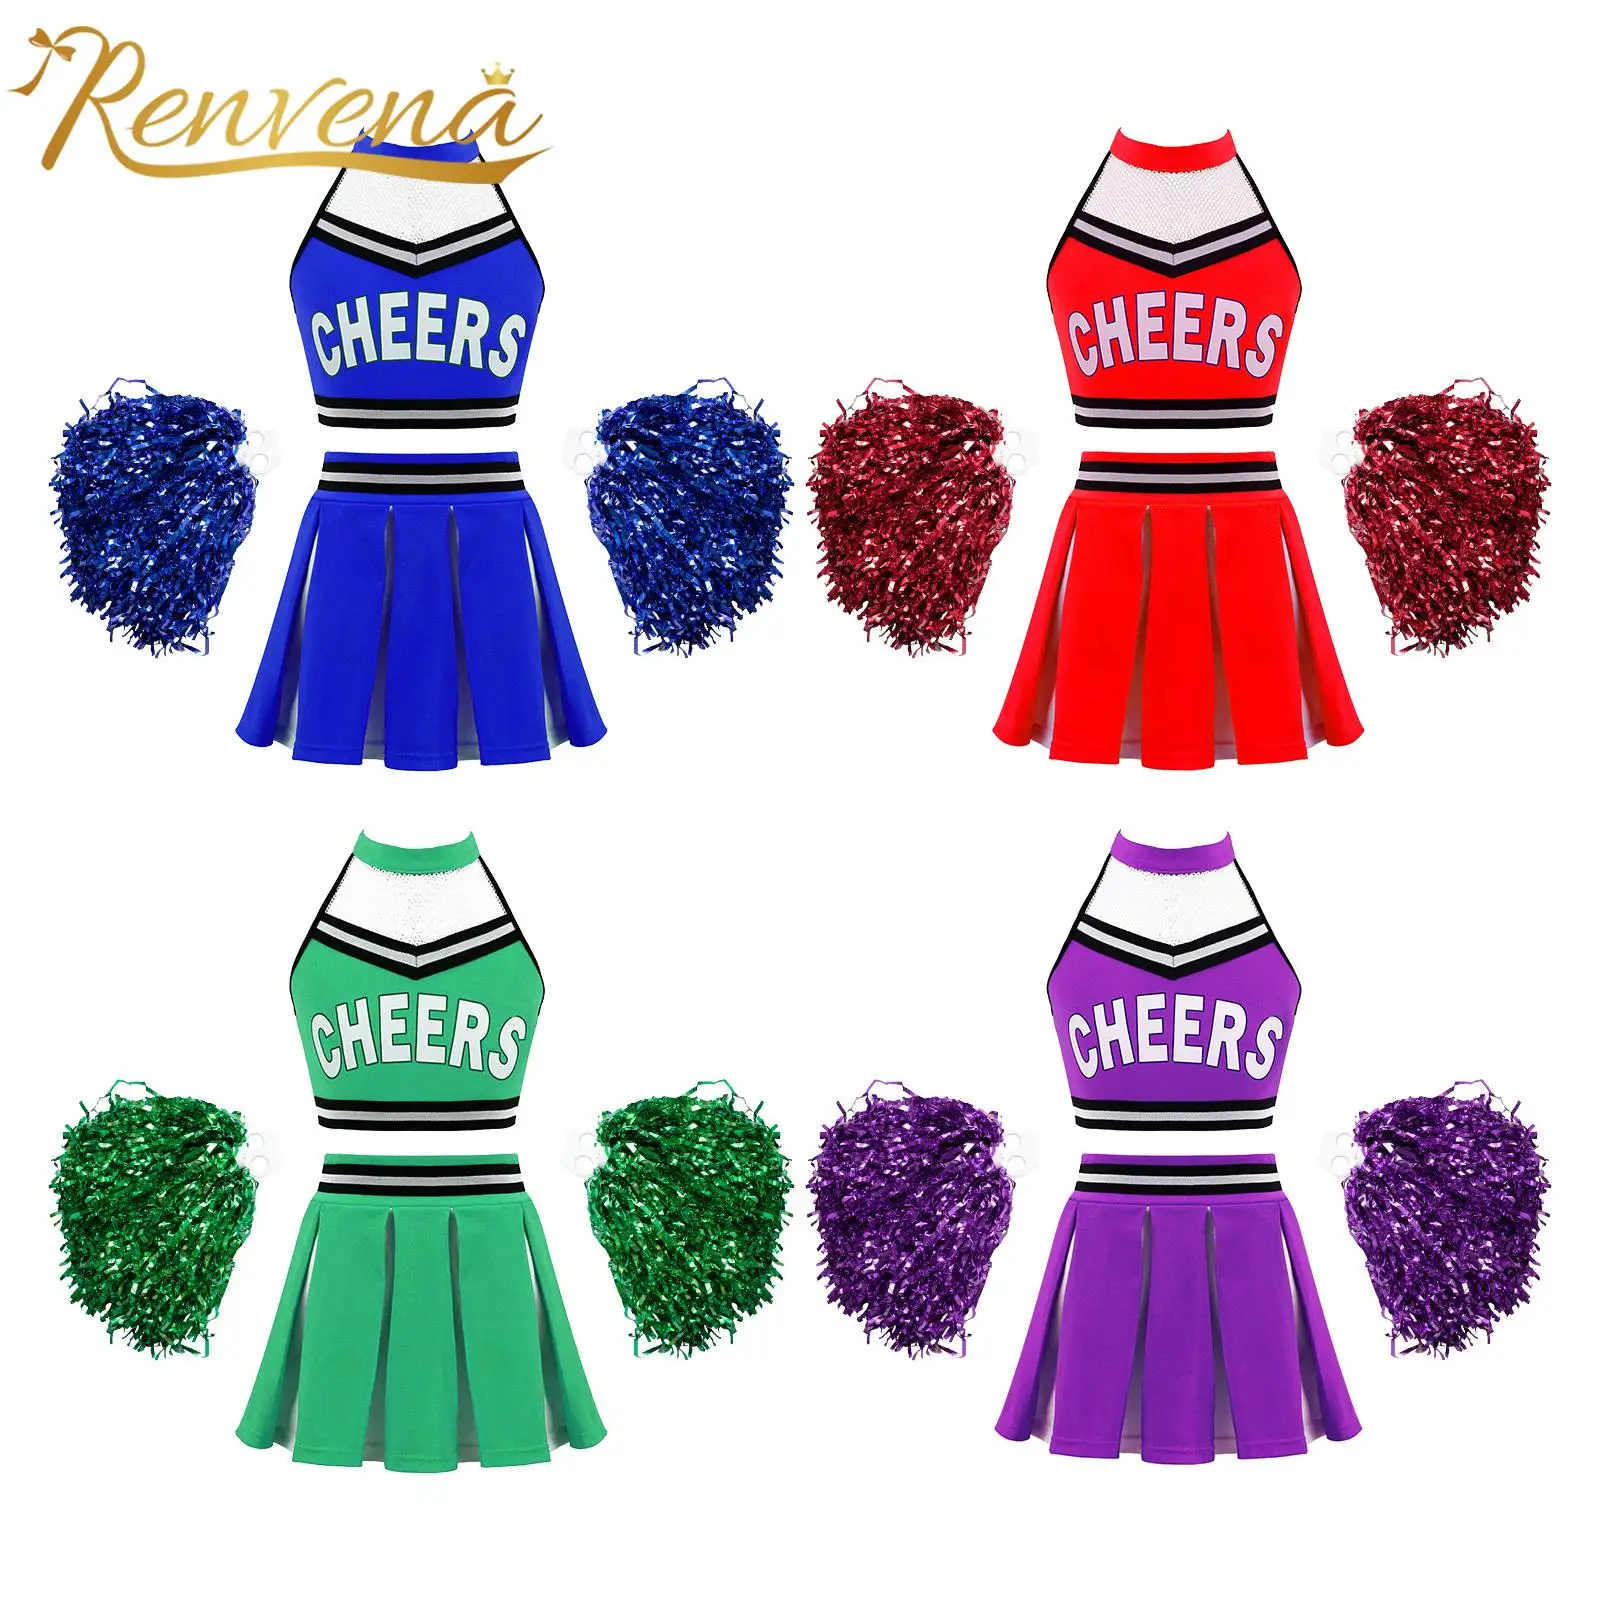 

Kids Girls Cheerleader Costumes Cheerleading Uniforms Outfit Crop Top + Skirt Flower Ball Dancewear Set for Dancing Competition